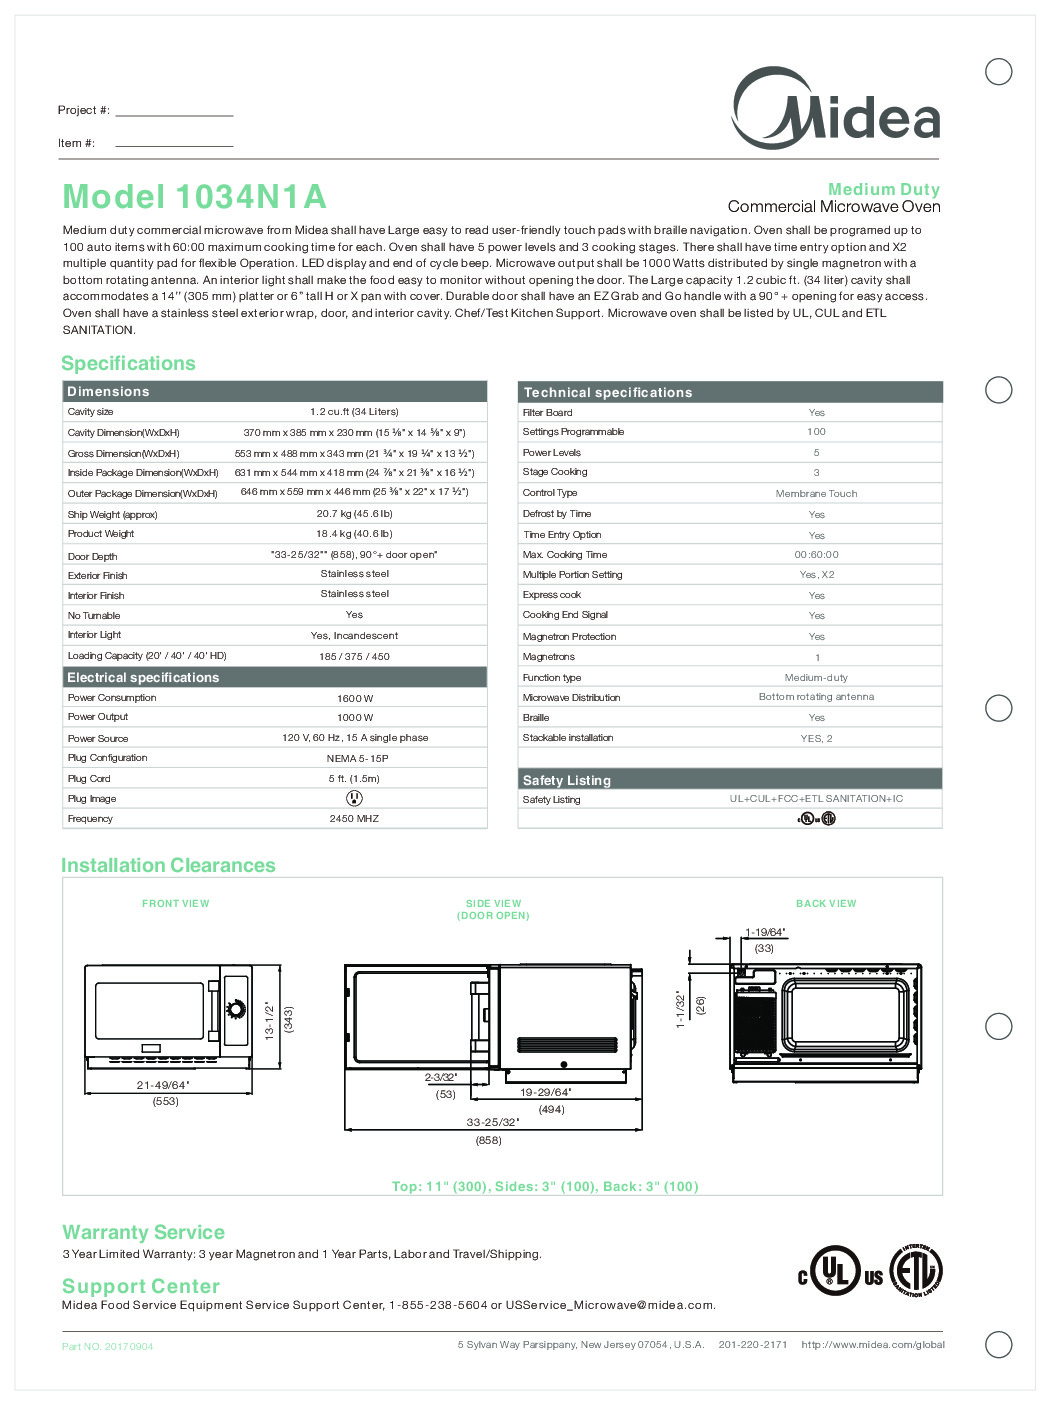 Midea 1034N1A 1000 Watts Medium Duty Commercial Microwave Oven, 1.2 cu. ft.